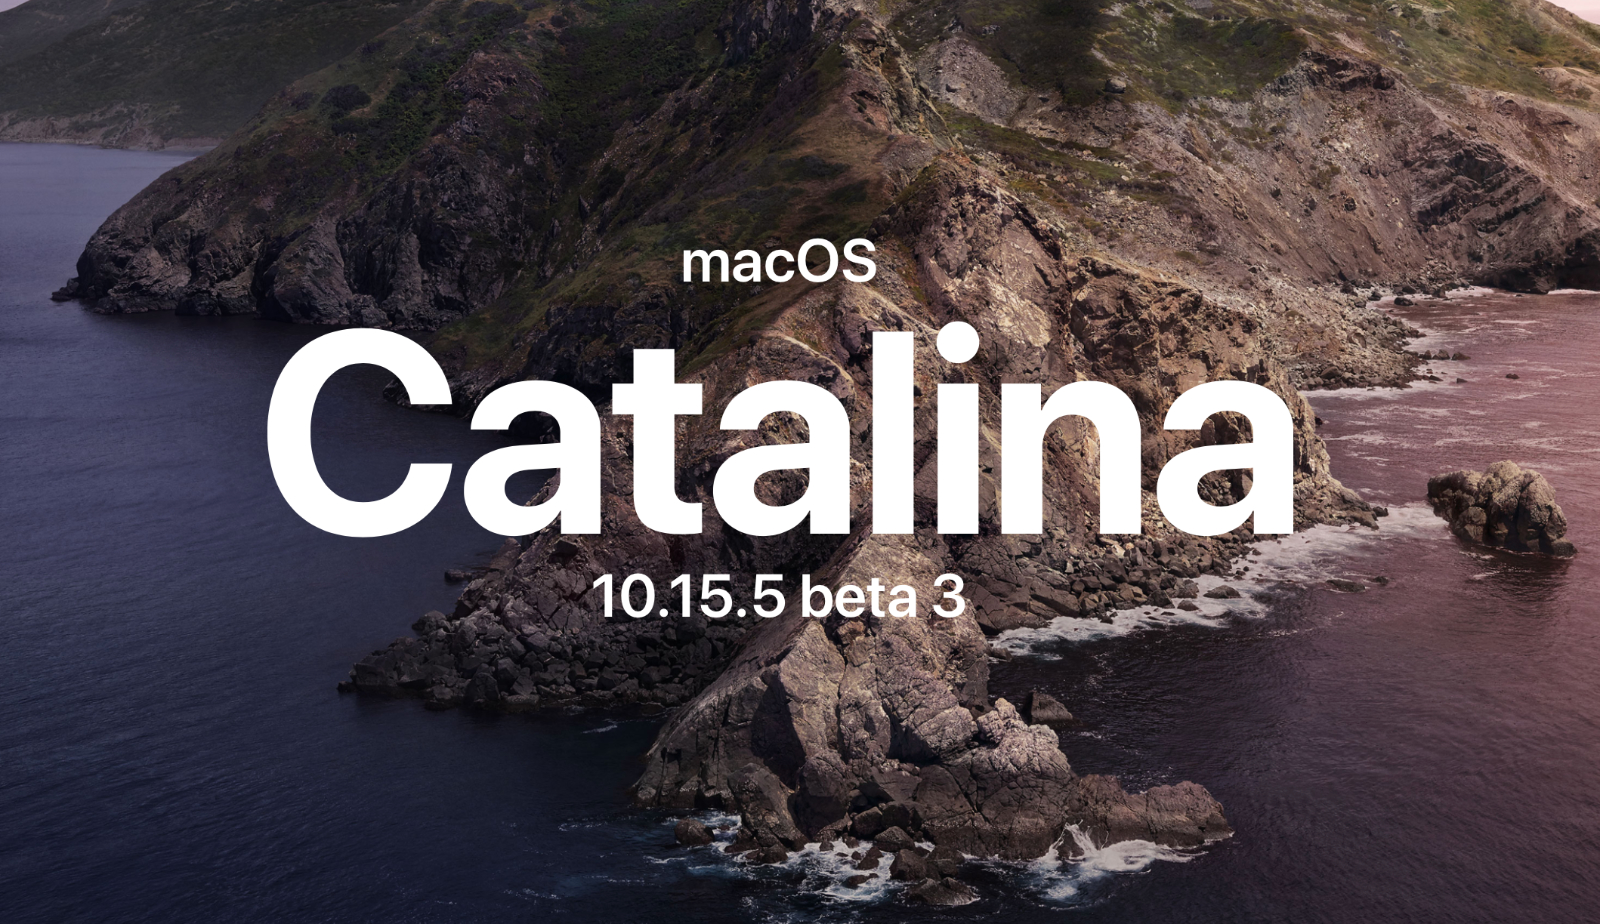 macOS Catalina 10.15.5 beta 3